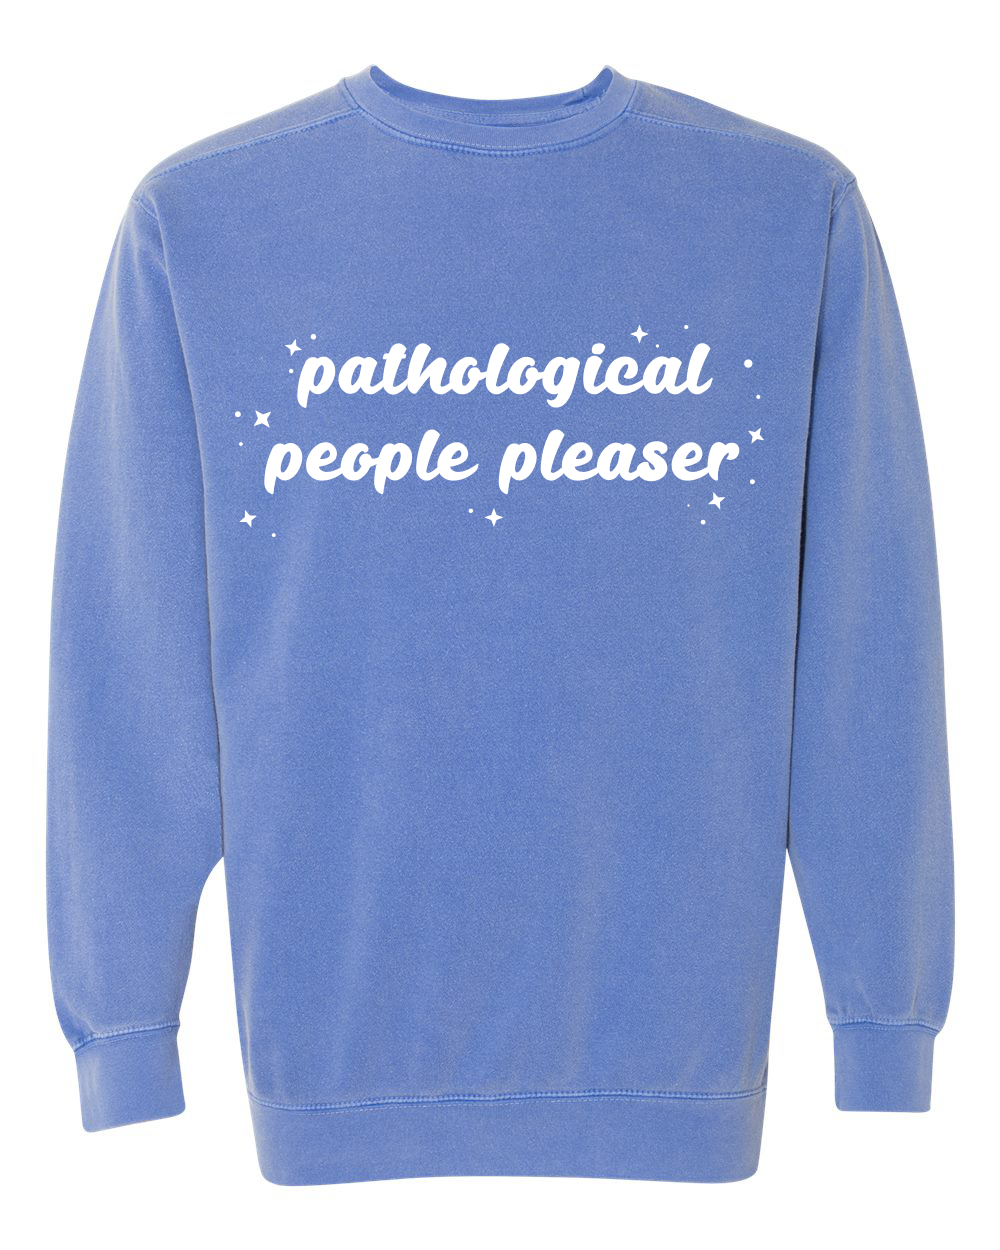 People Pleaser crewneck sweatshirt